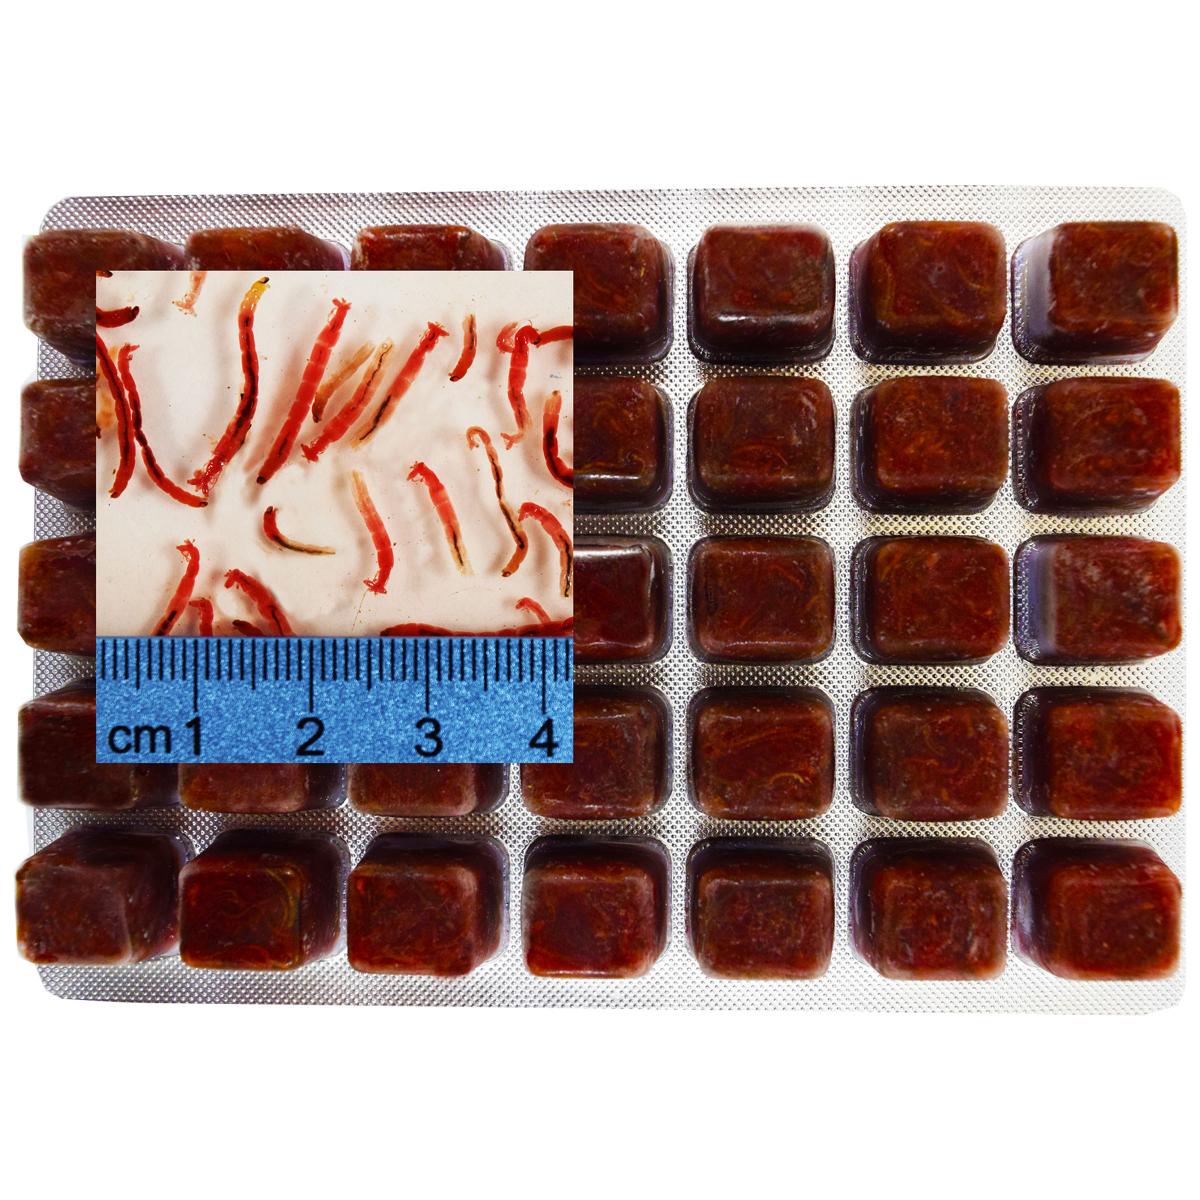 Frozen Bloodworm cube trays, 7 x 3.5 oz. cube trays, 1 box